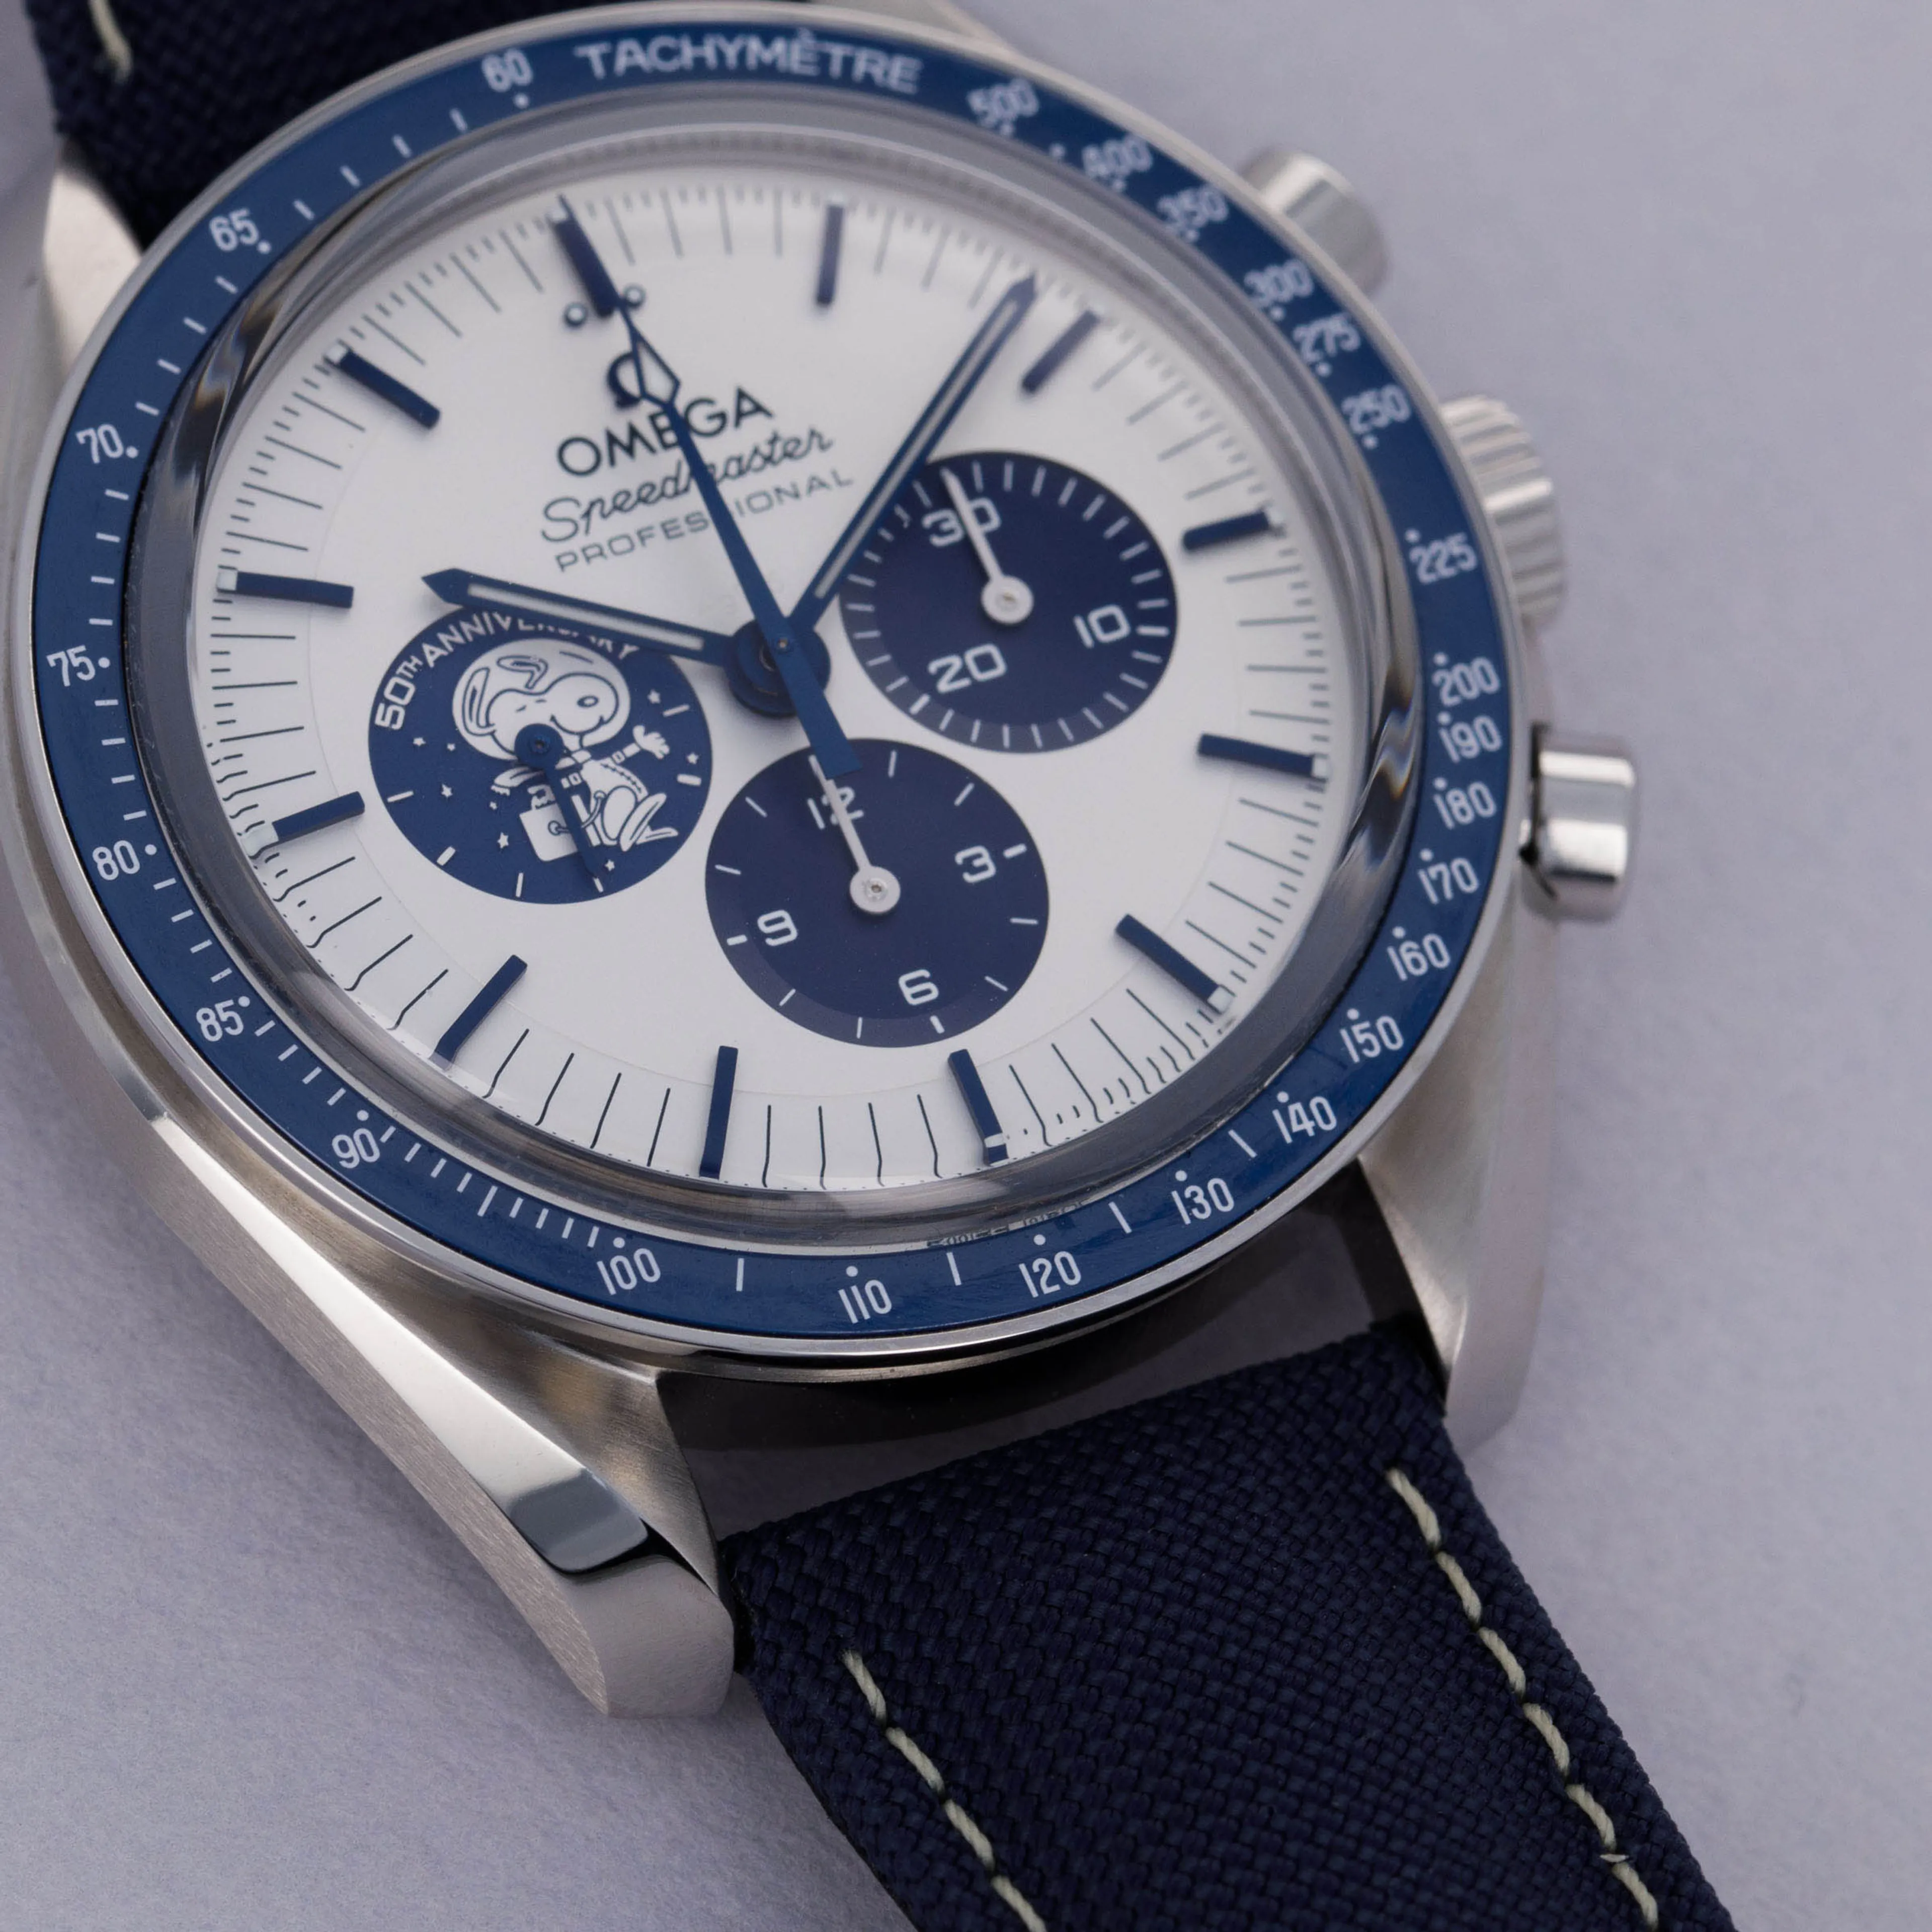 Omega Speedmaster Moon watch 310.32.42.50.02.001 42mm Stainless steel Silver 1